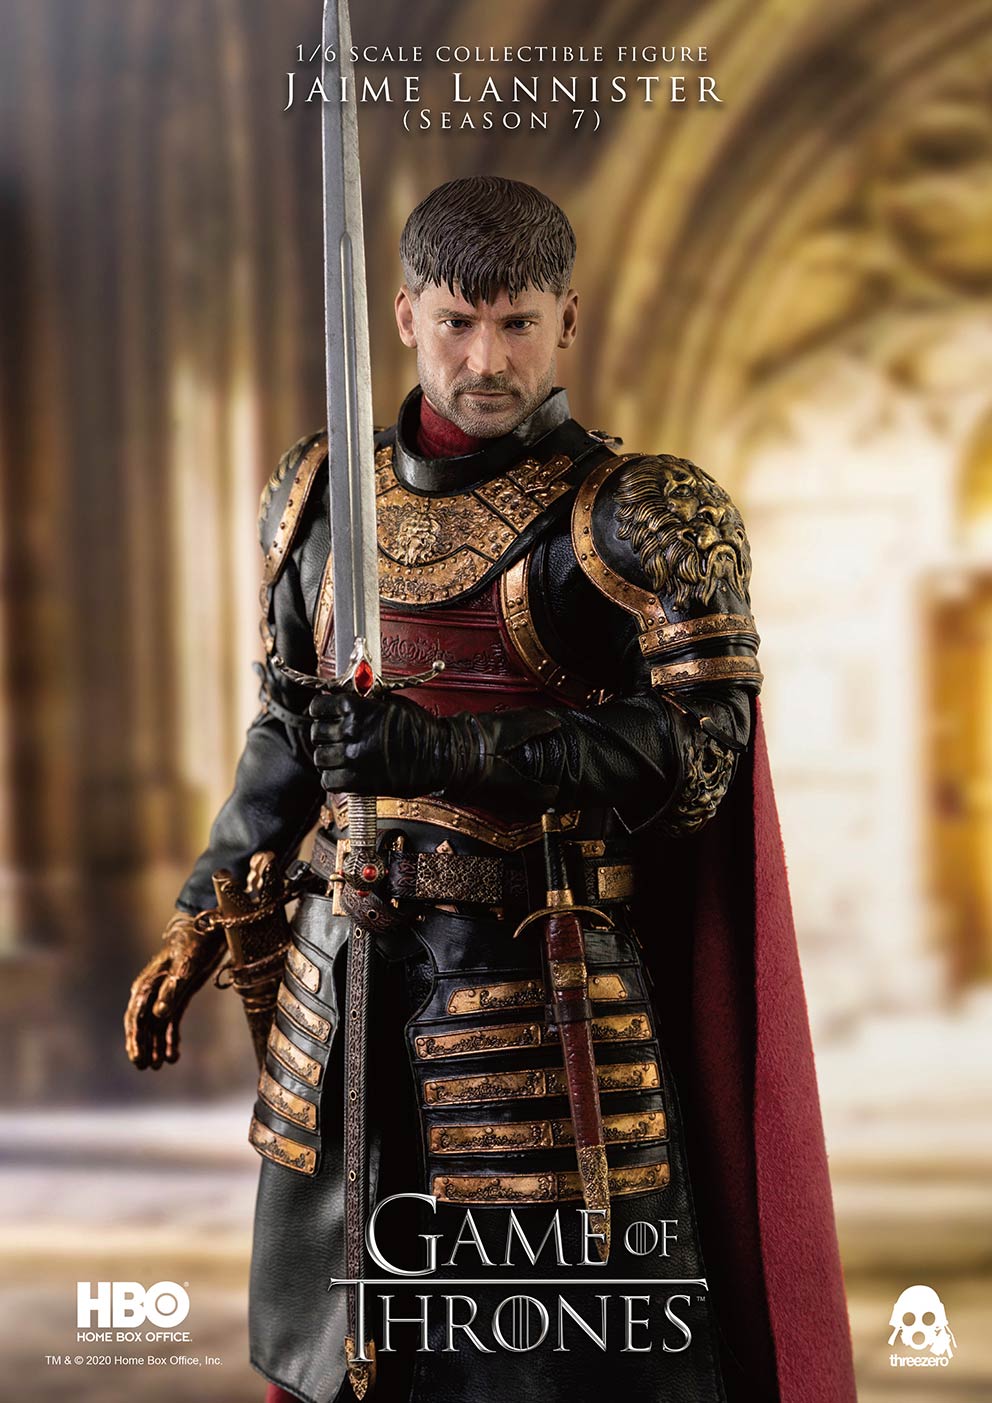 Fantasy - NEW PRODUCT: ThreeZero - "Game of Thrones" Season 7 - Kingslayer Jaime Lannister 0373